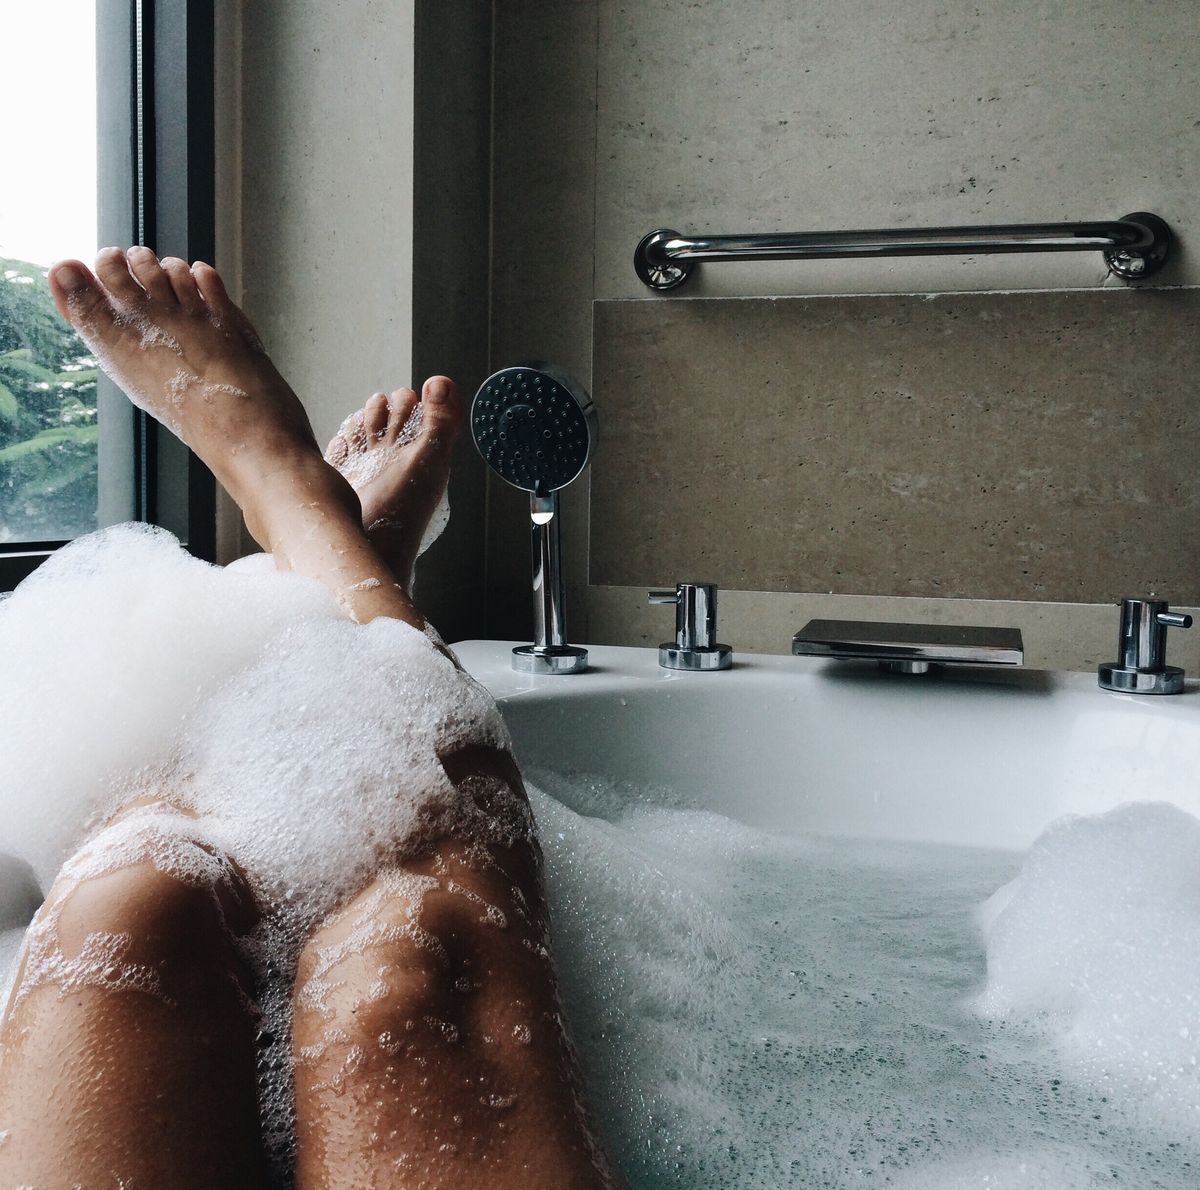 How to Fall Asleep Faster - Hot Baths for Sleep